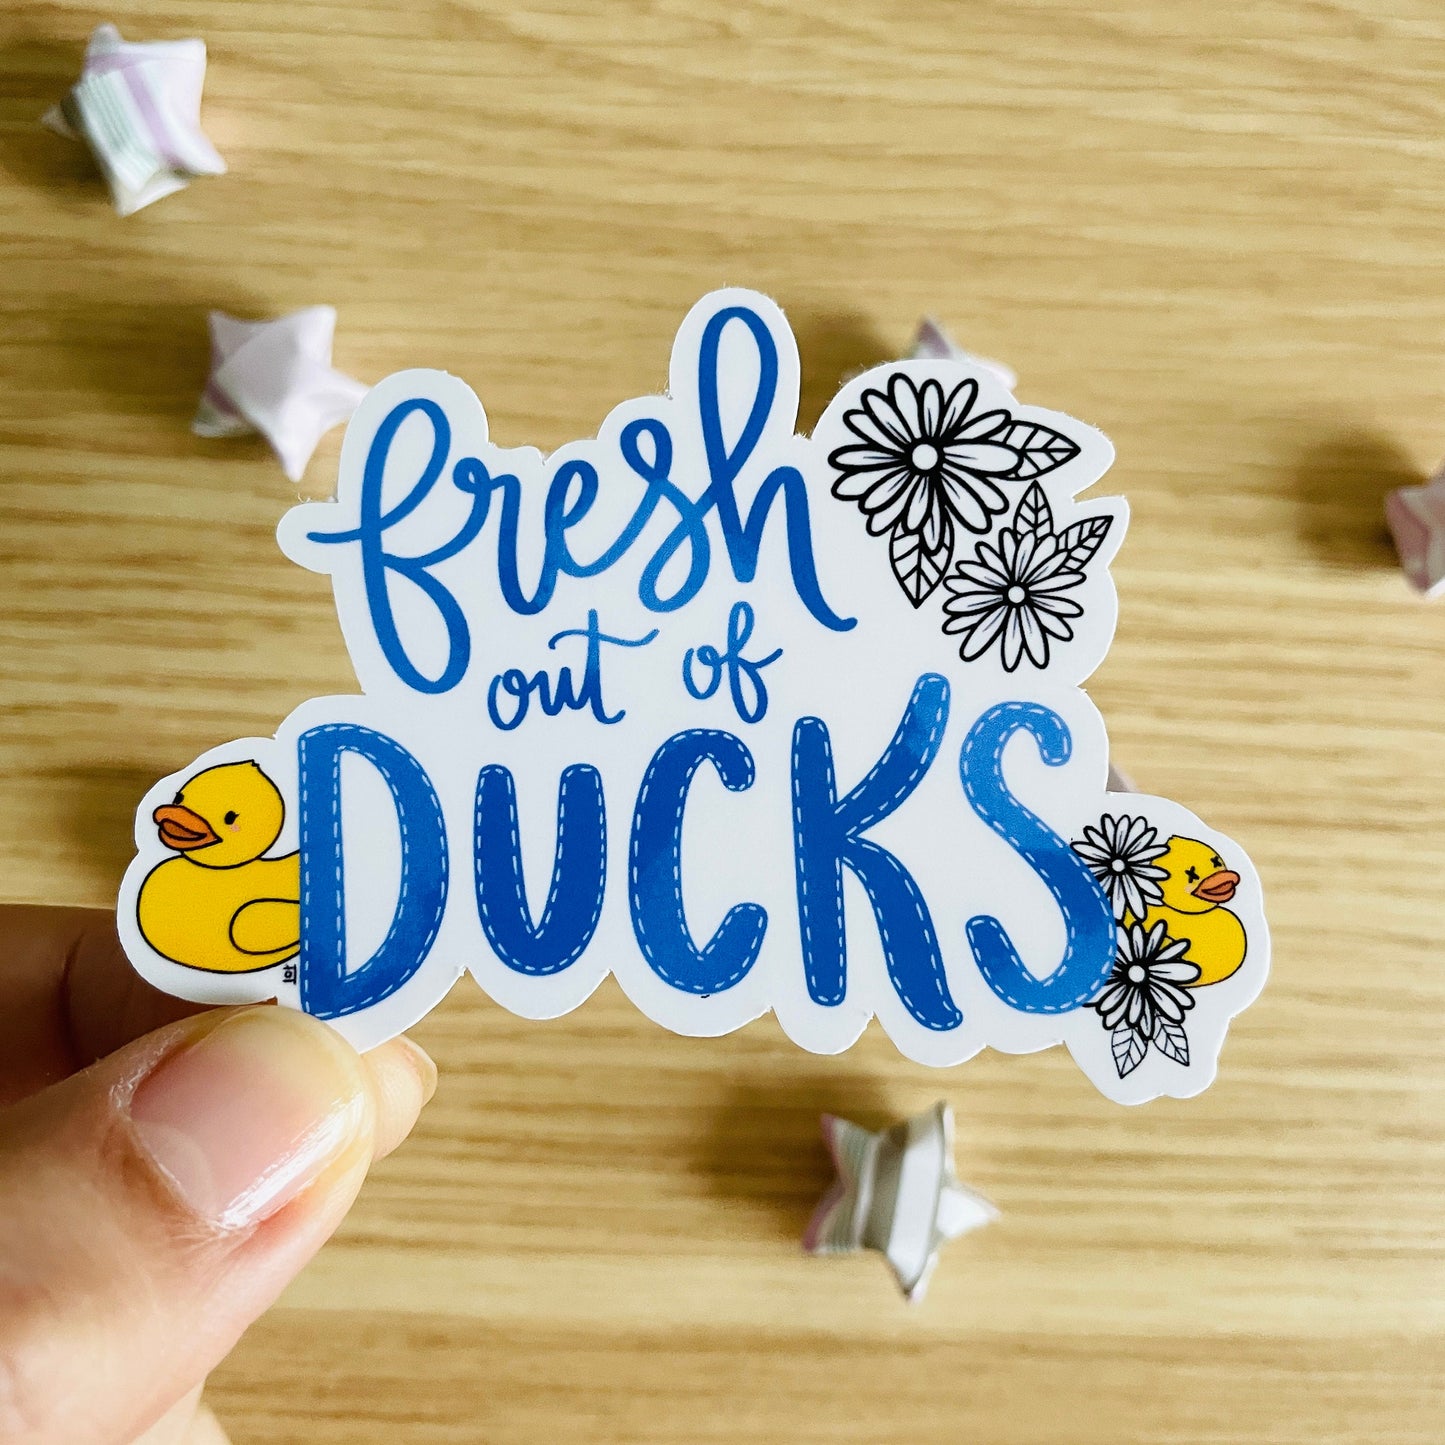 Fresh Out Of Ducks Sticker